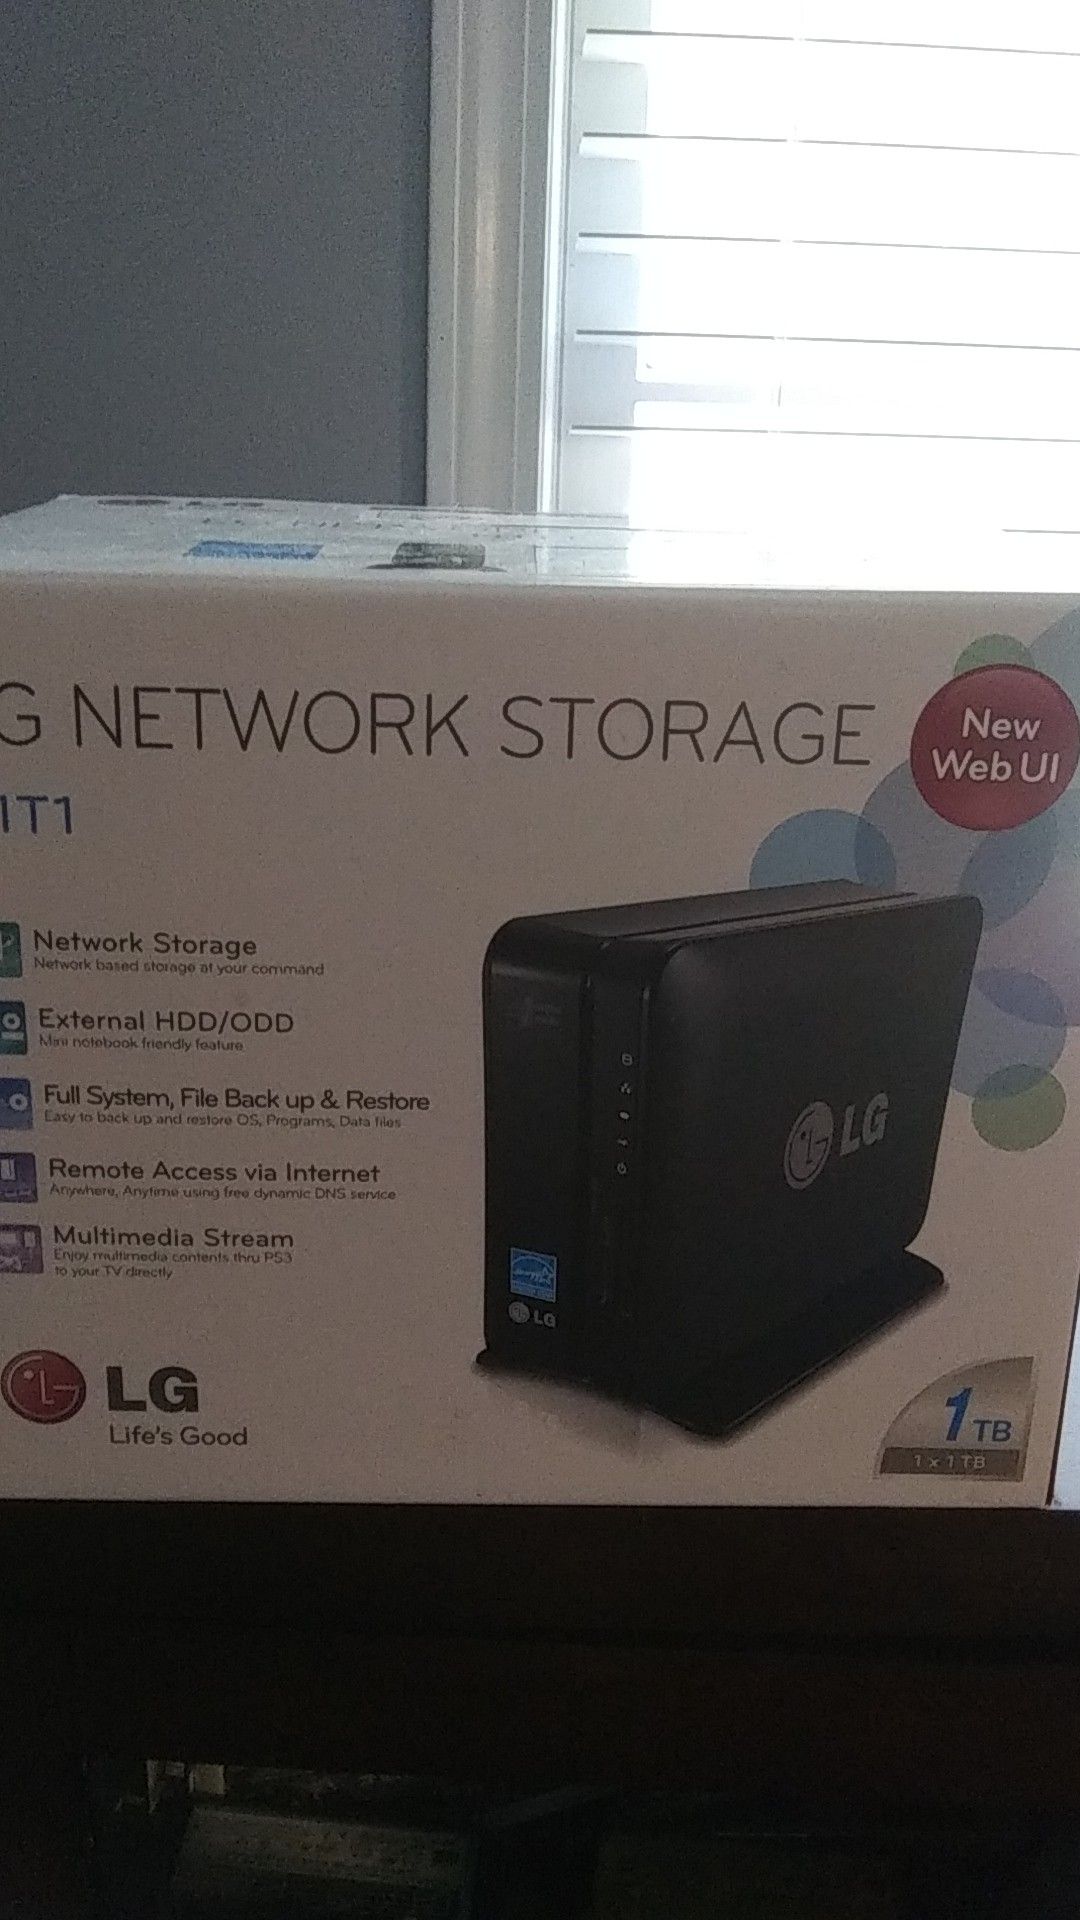 LG Network Storage. New still in the box.